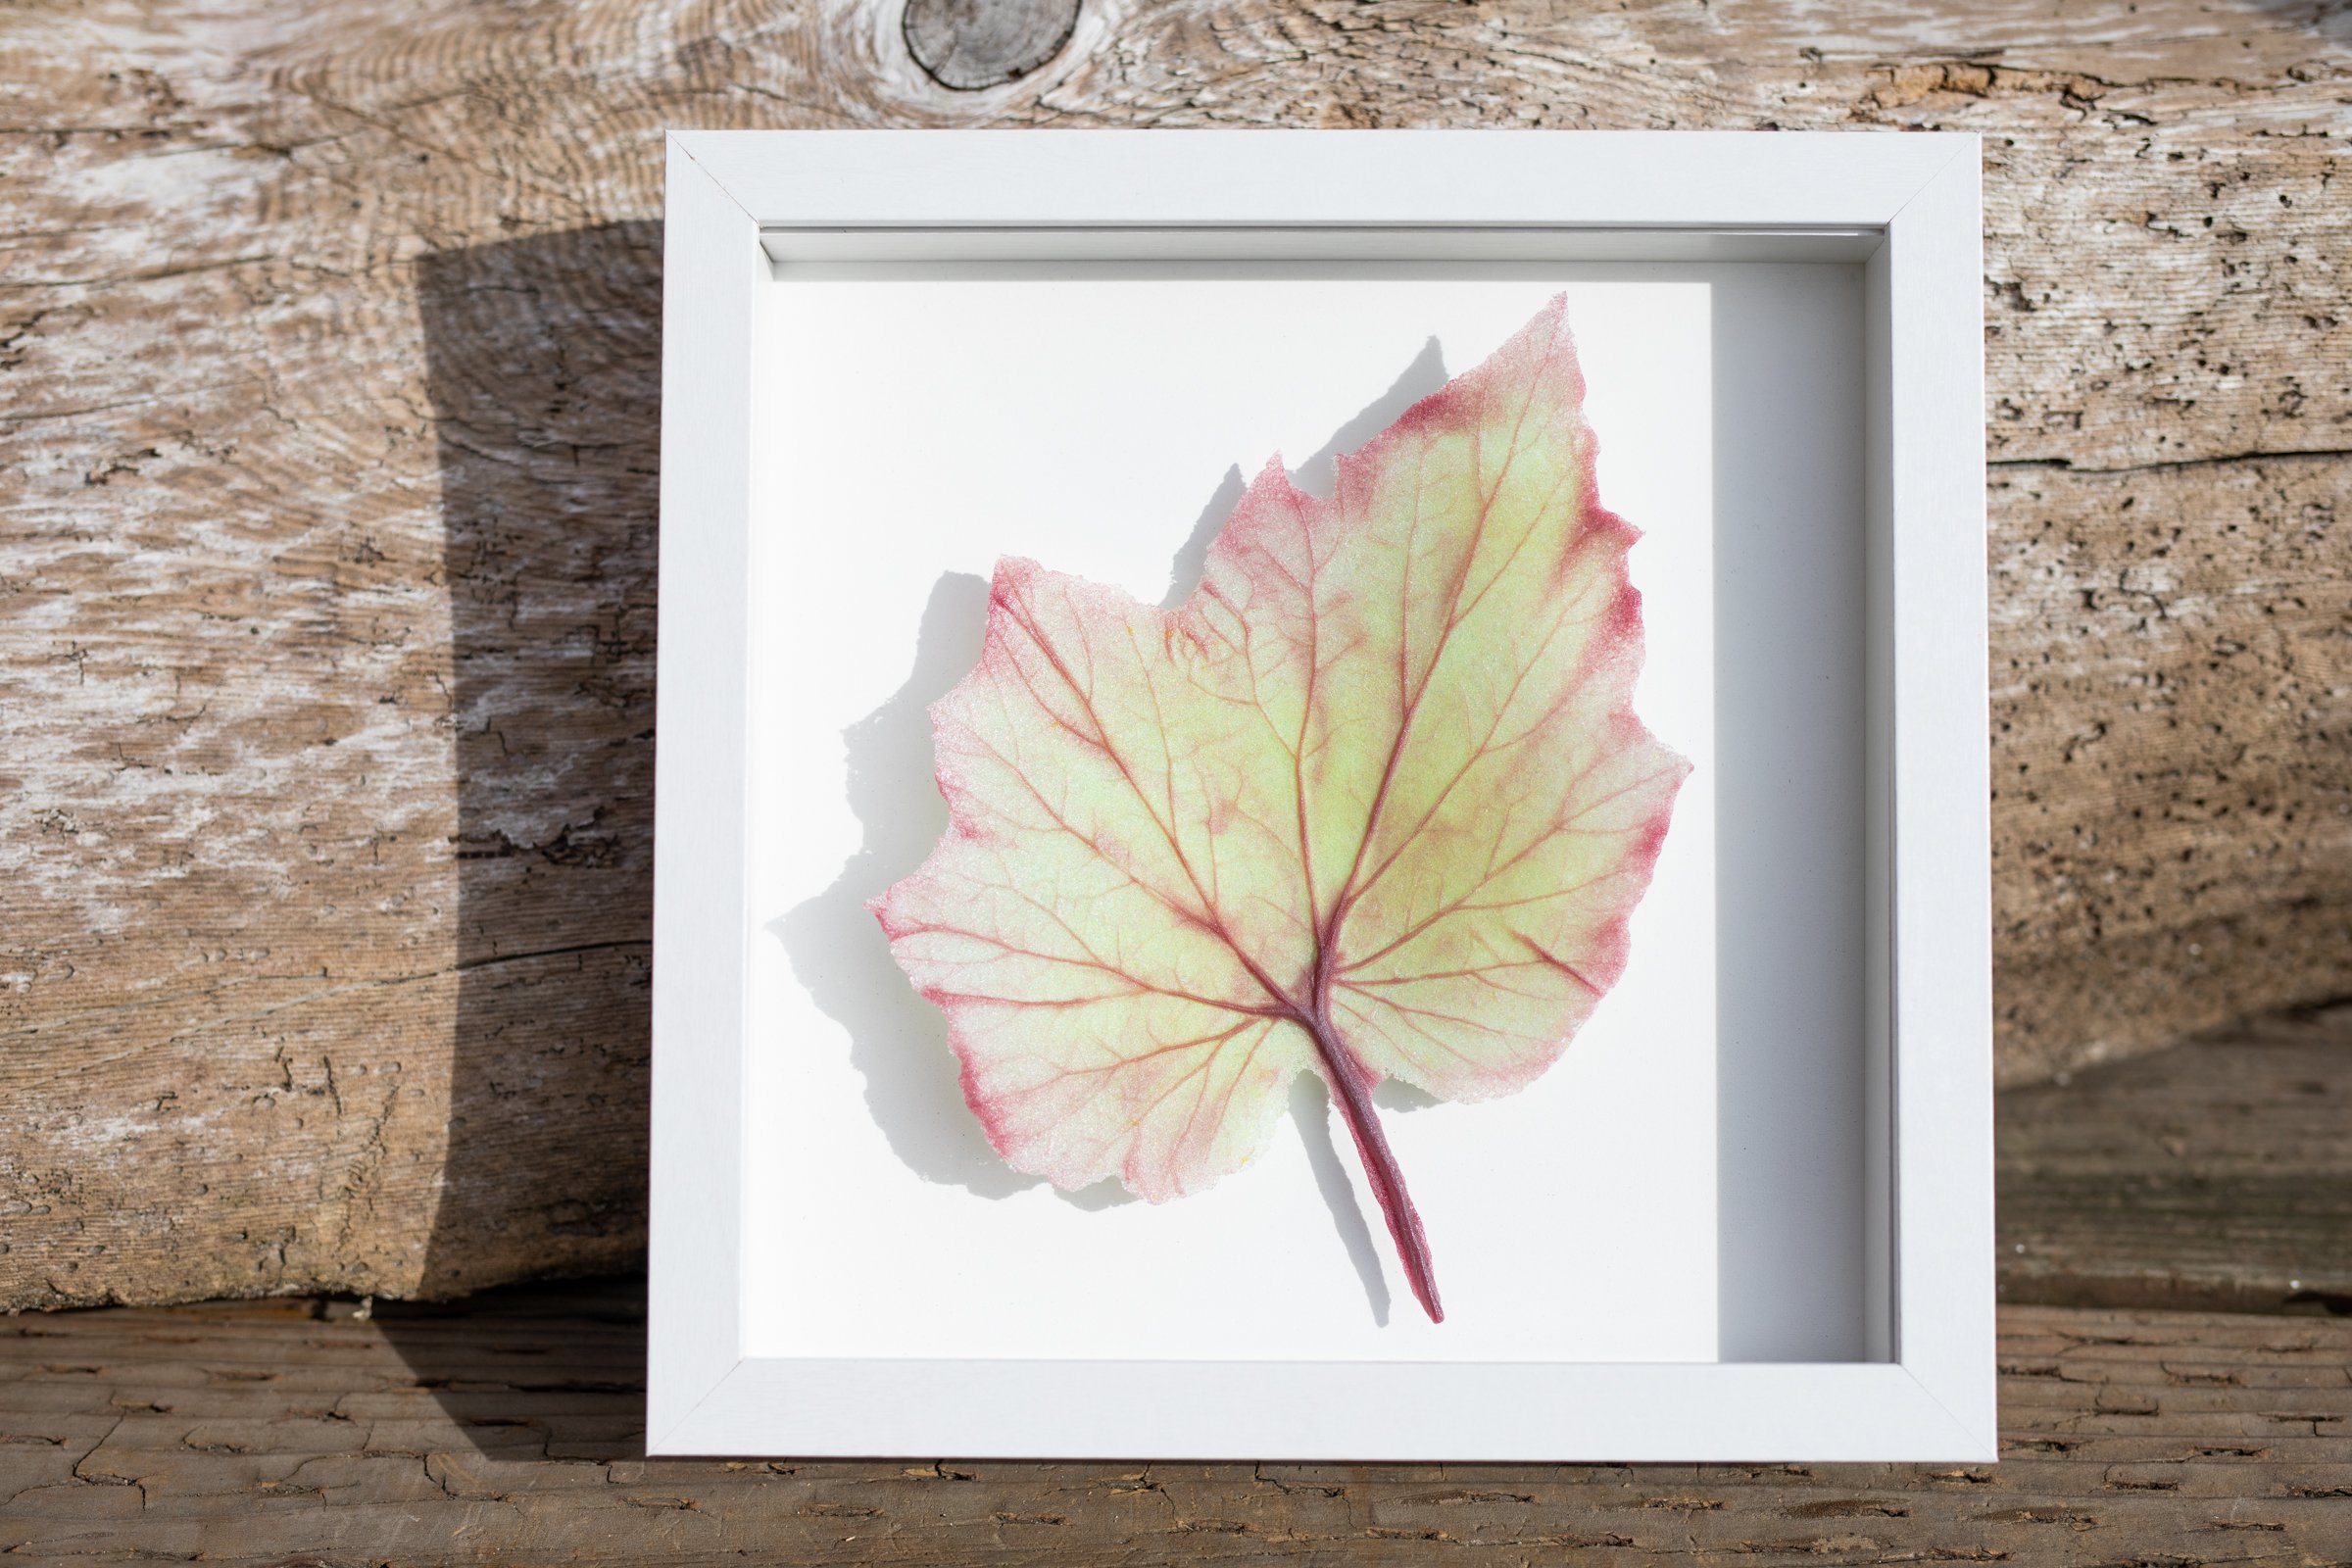 jen-fuller-studios-glass-begonia-leaf-art-patte-de-verre.jpg